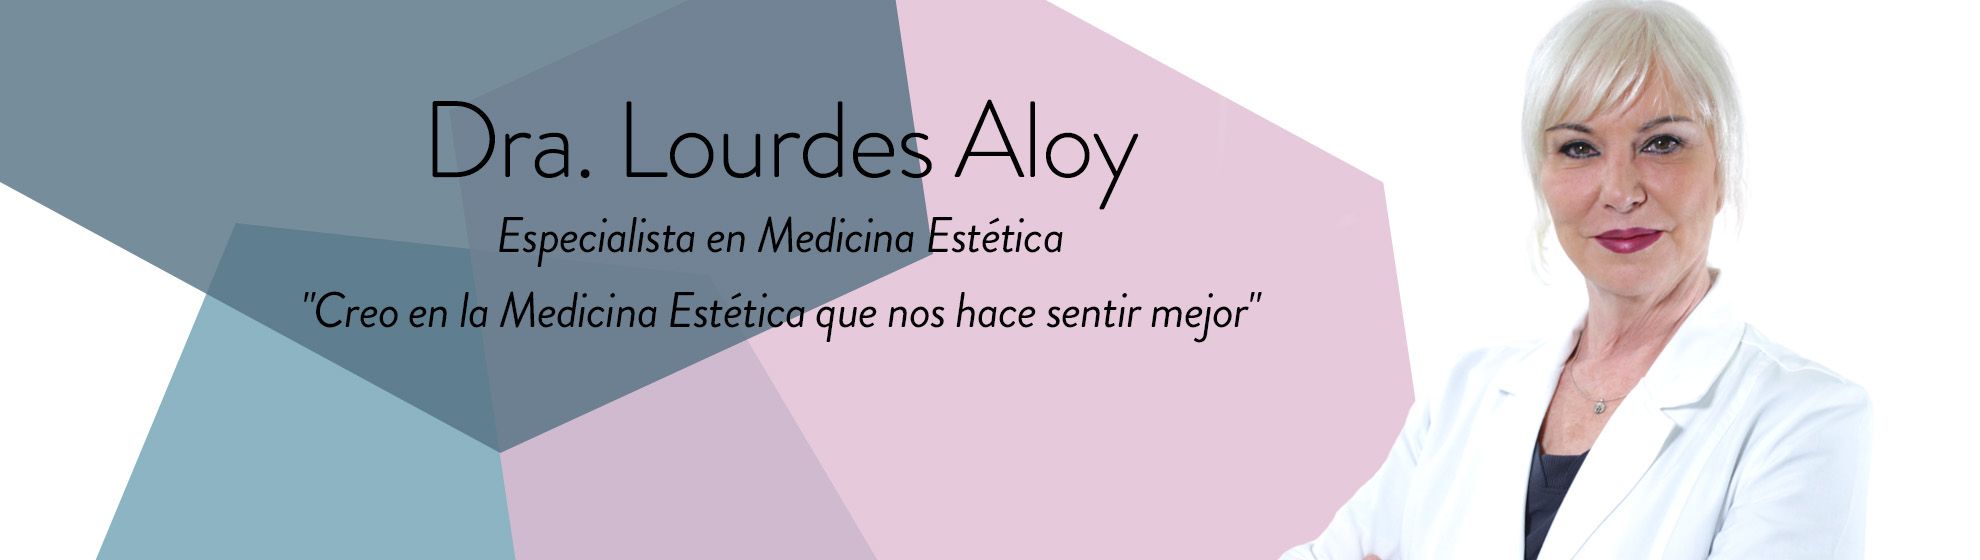 Dra. Lourdes Aloy